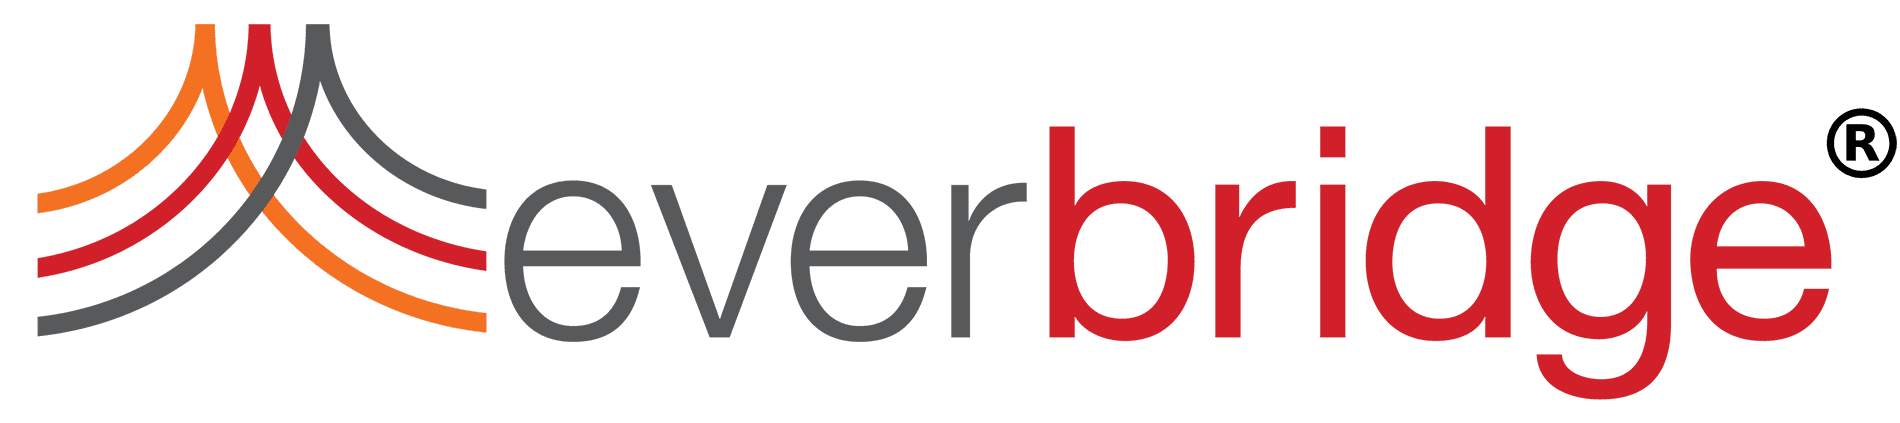 everbridge_logo_new